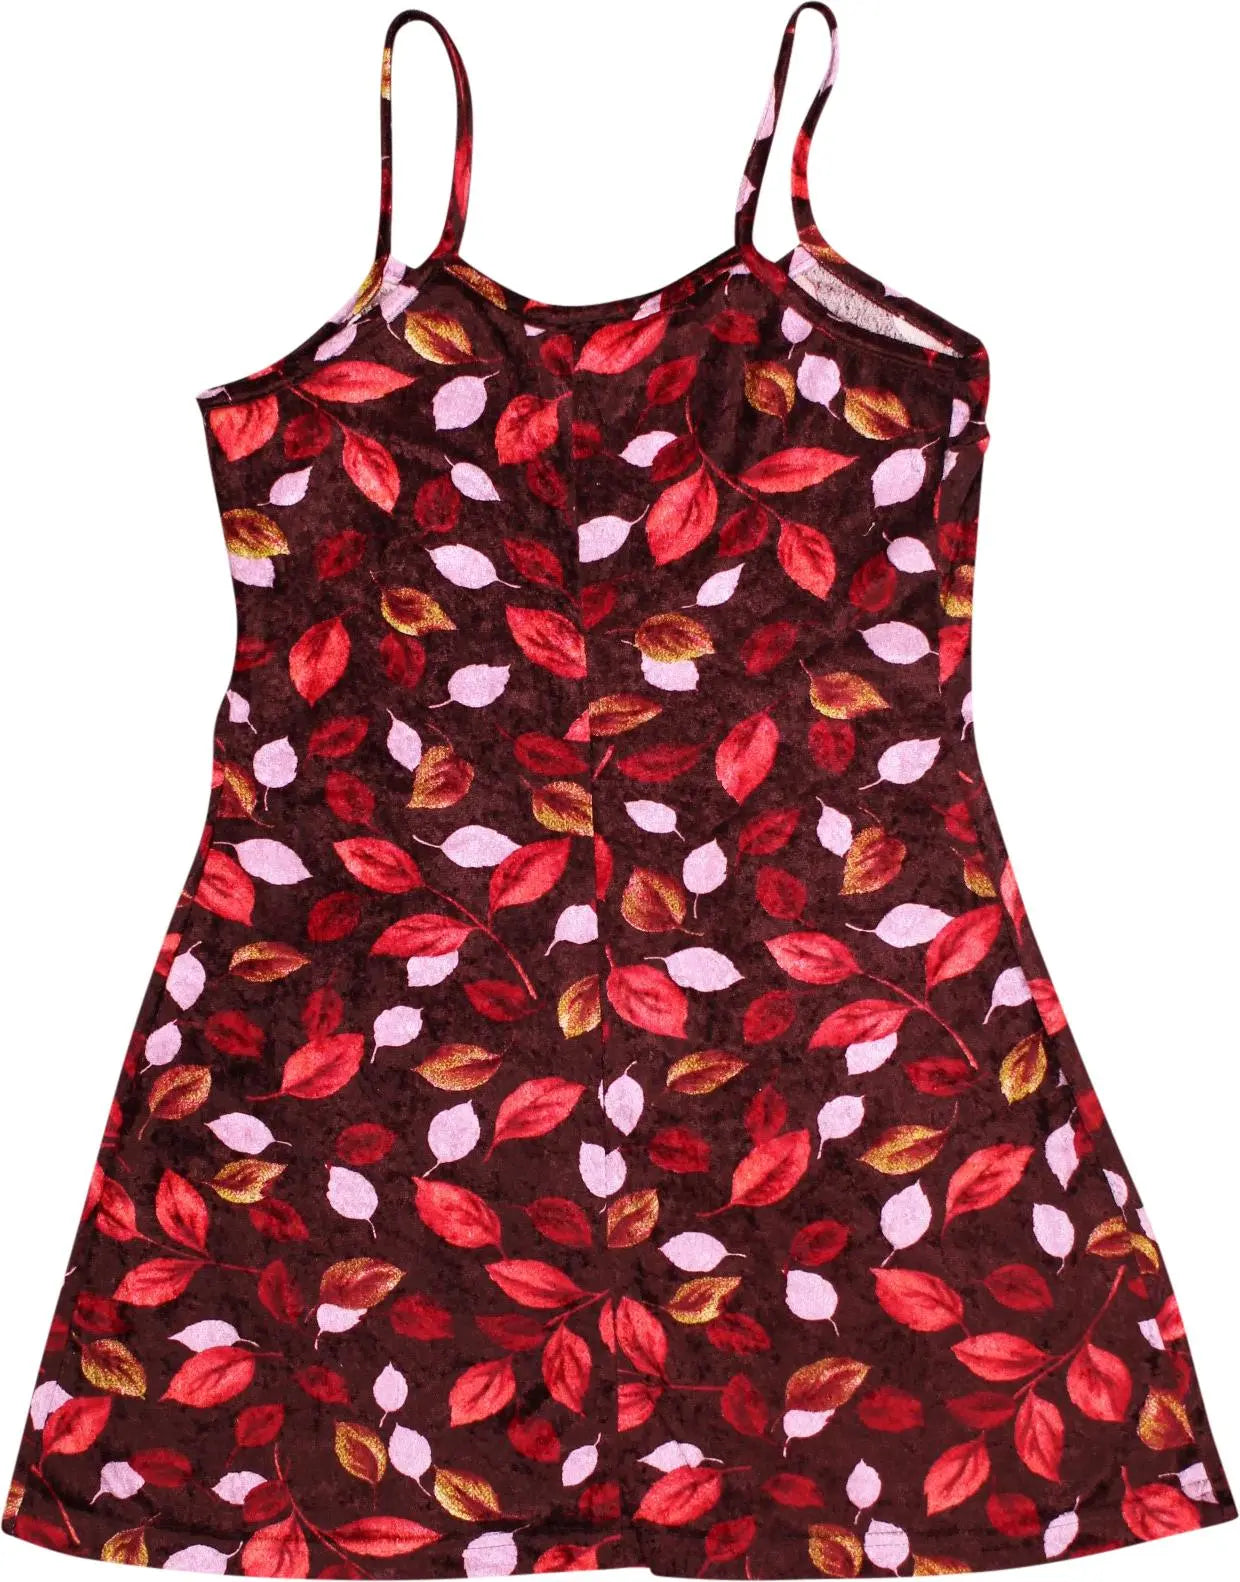 Redok - Velvet Mini Dress- ThriftTale.com - Vintage and second handclothing